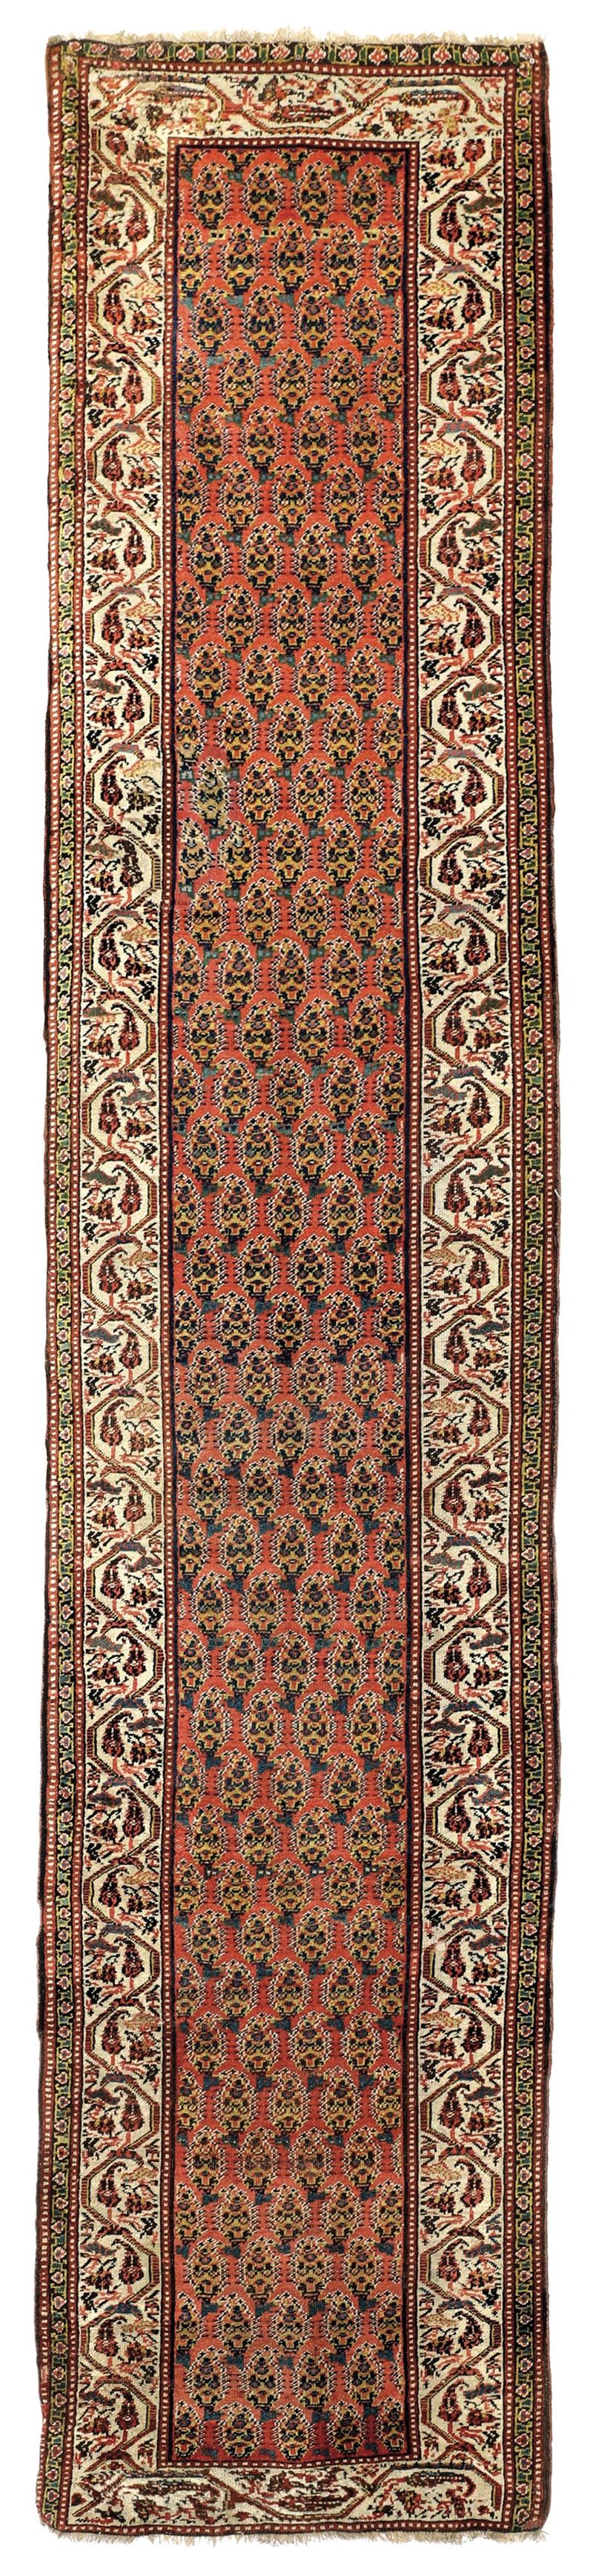 Galleria Karabagh, fine XIX secolo  - Auction Antique carpets - Cambi Casa d'Aste